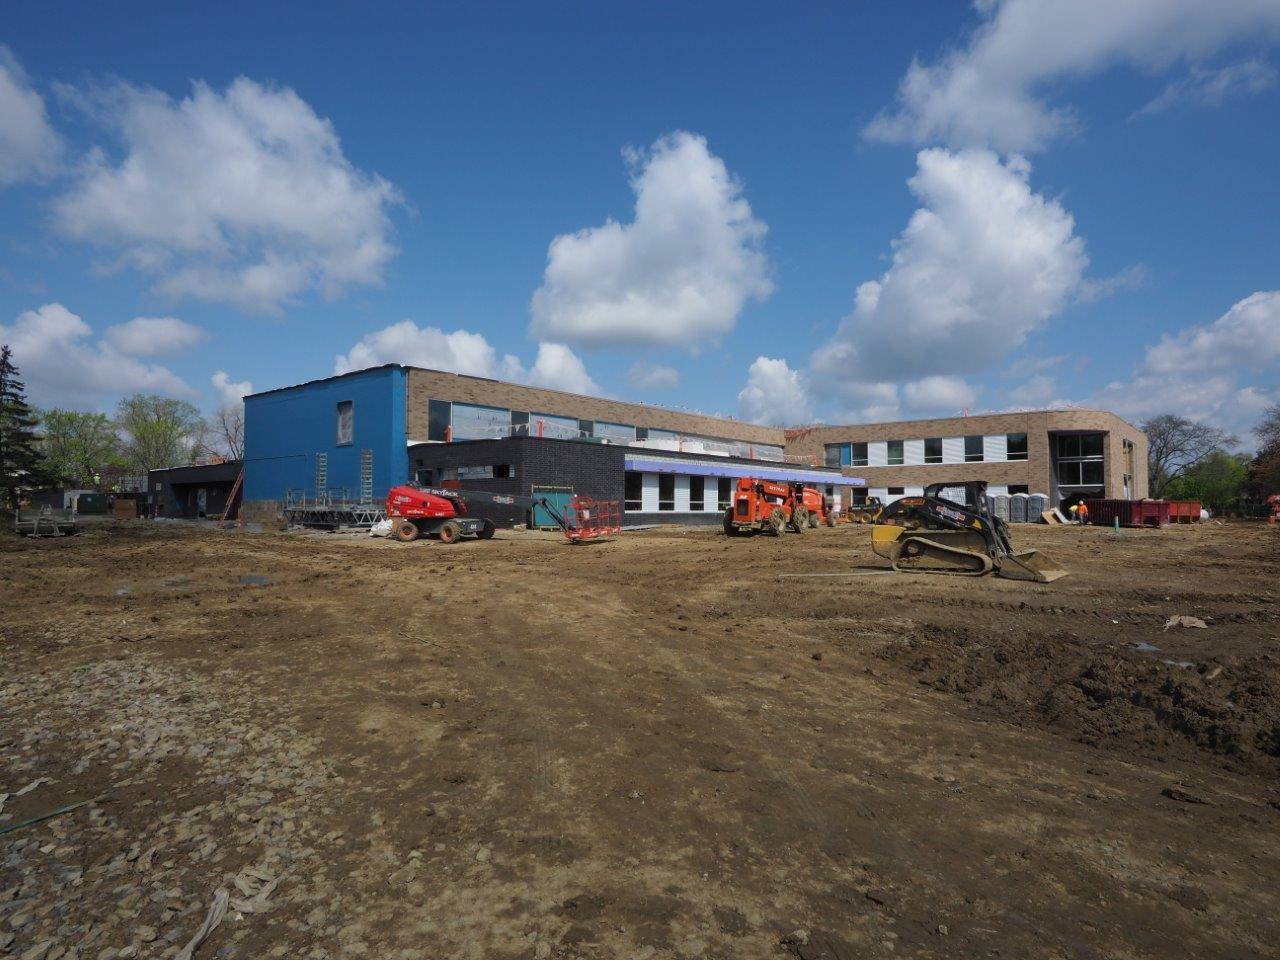 The new Windermere Elementary School